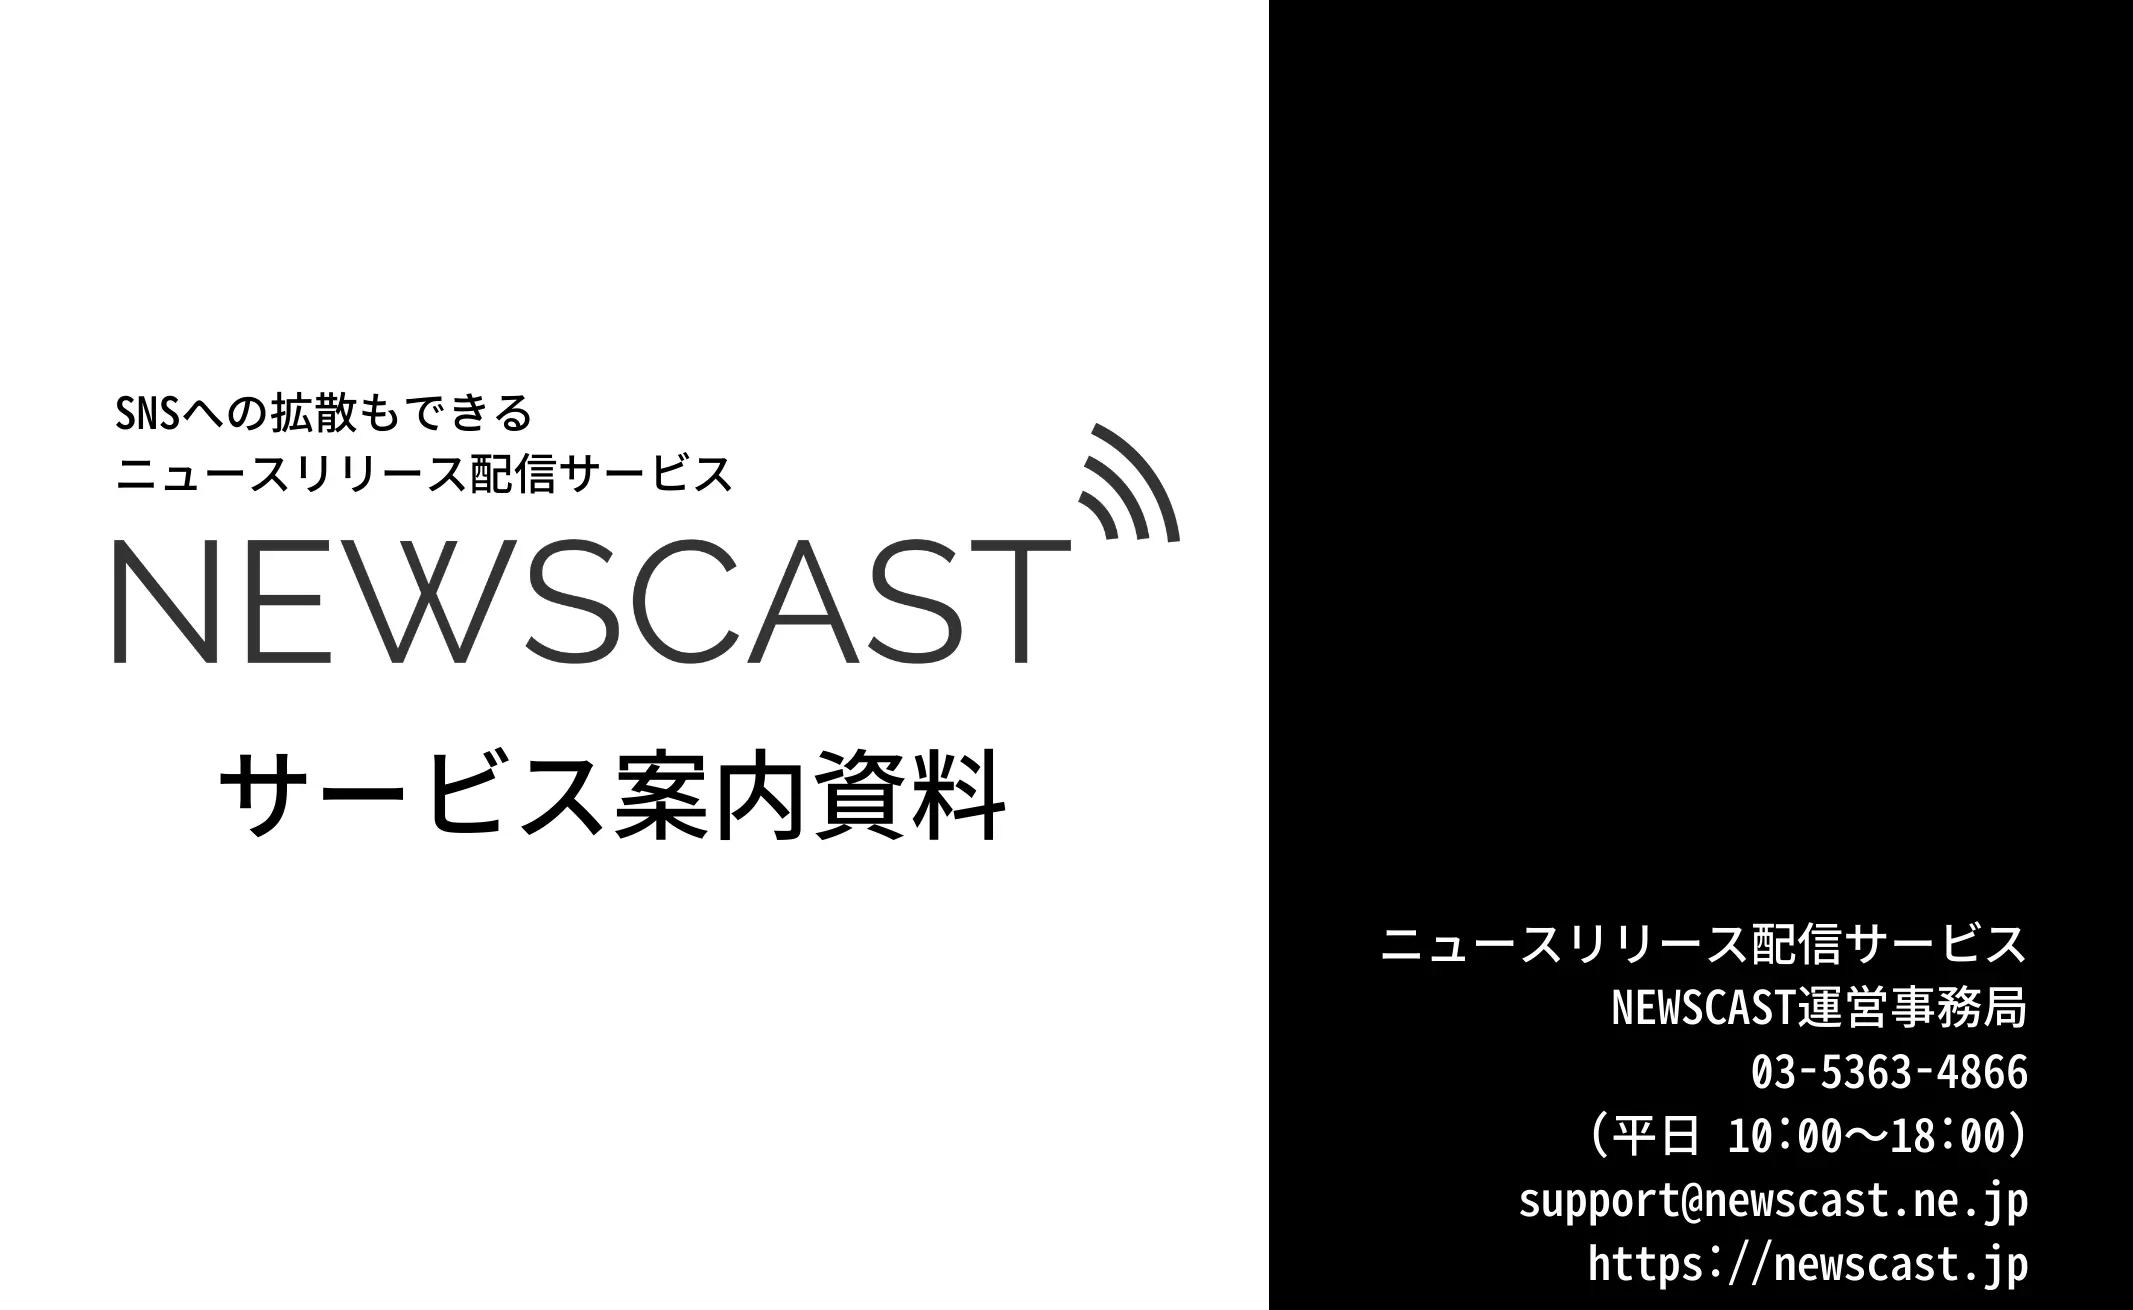 newscast_service_00